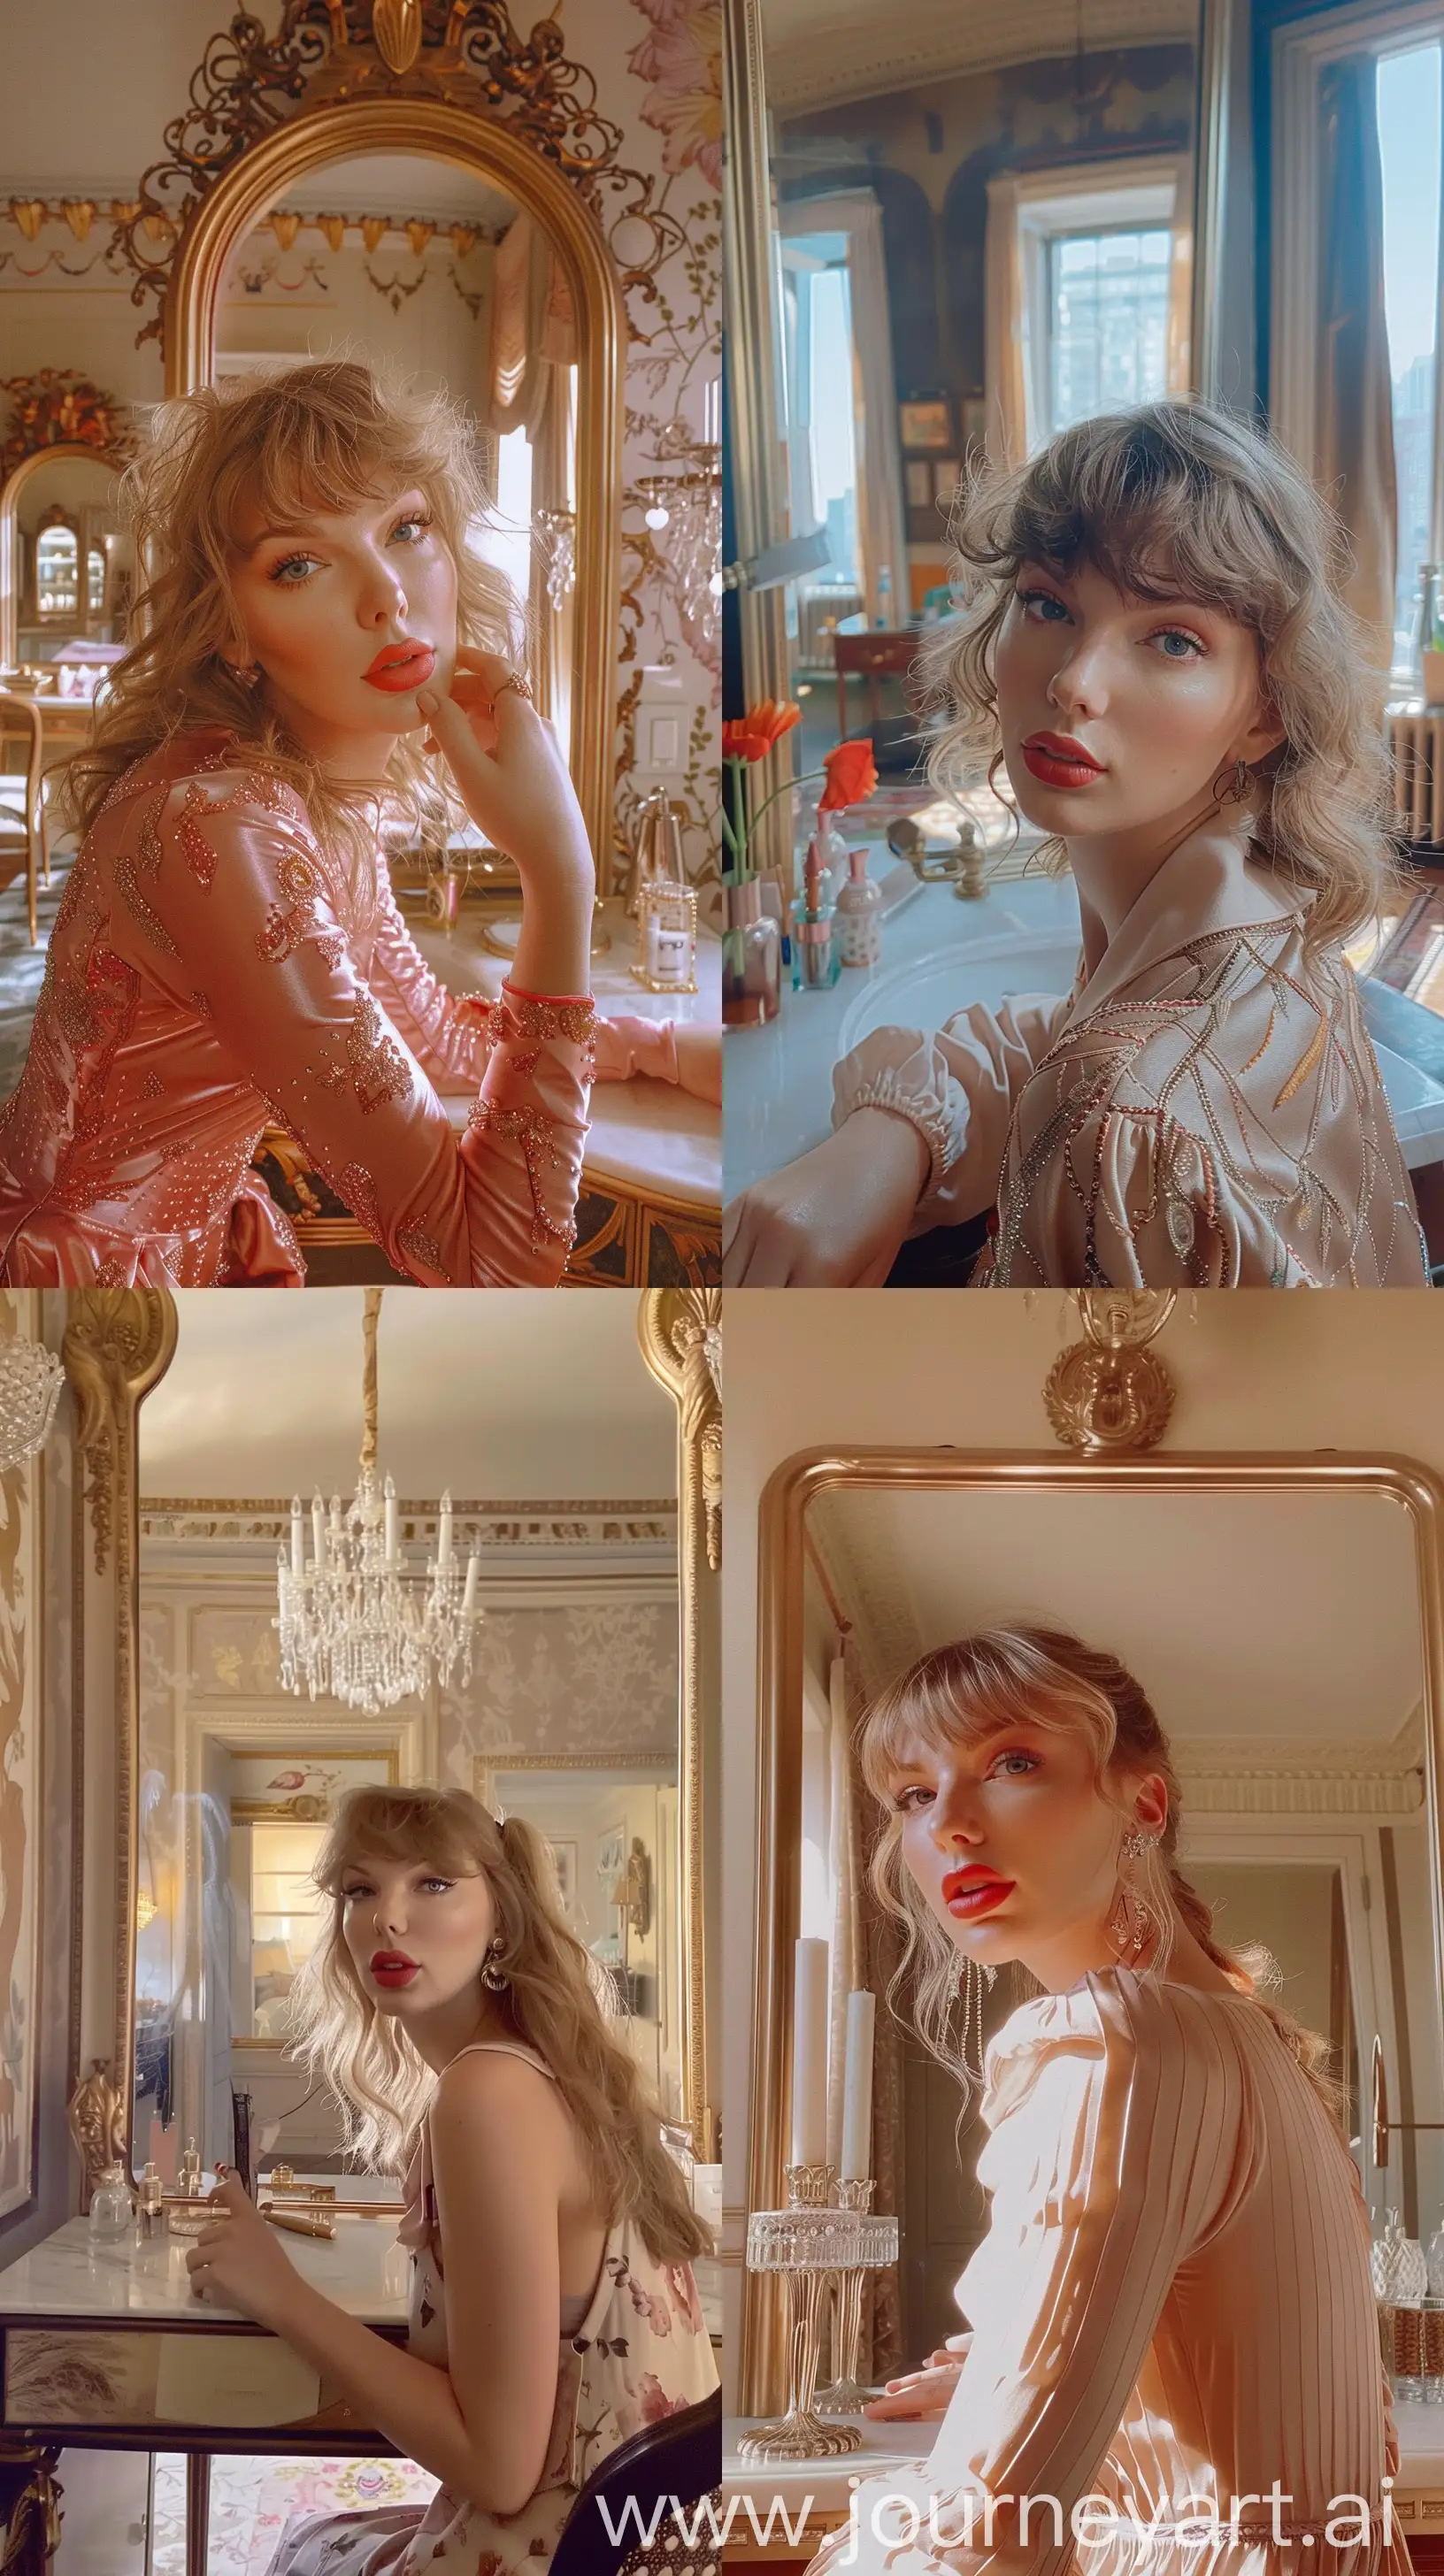 Taylor-Swift-Elegant-Vanity-Selfie-in-New-York-Apartment